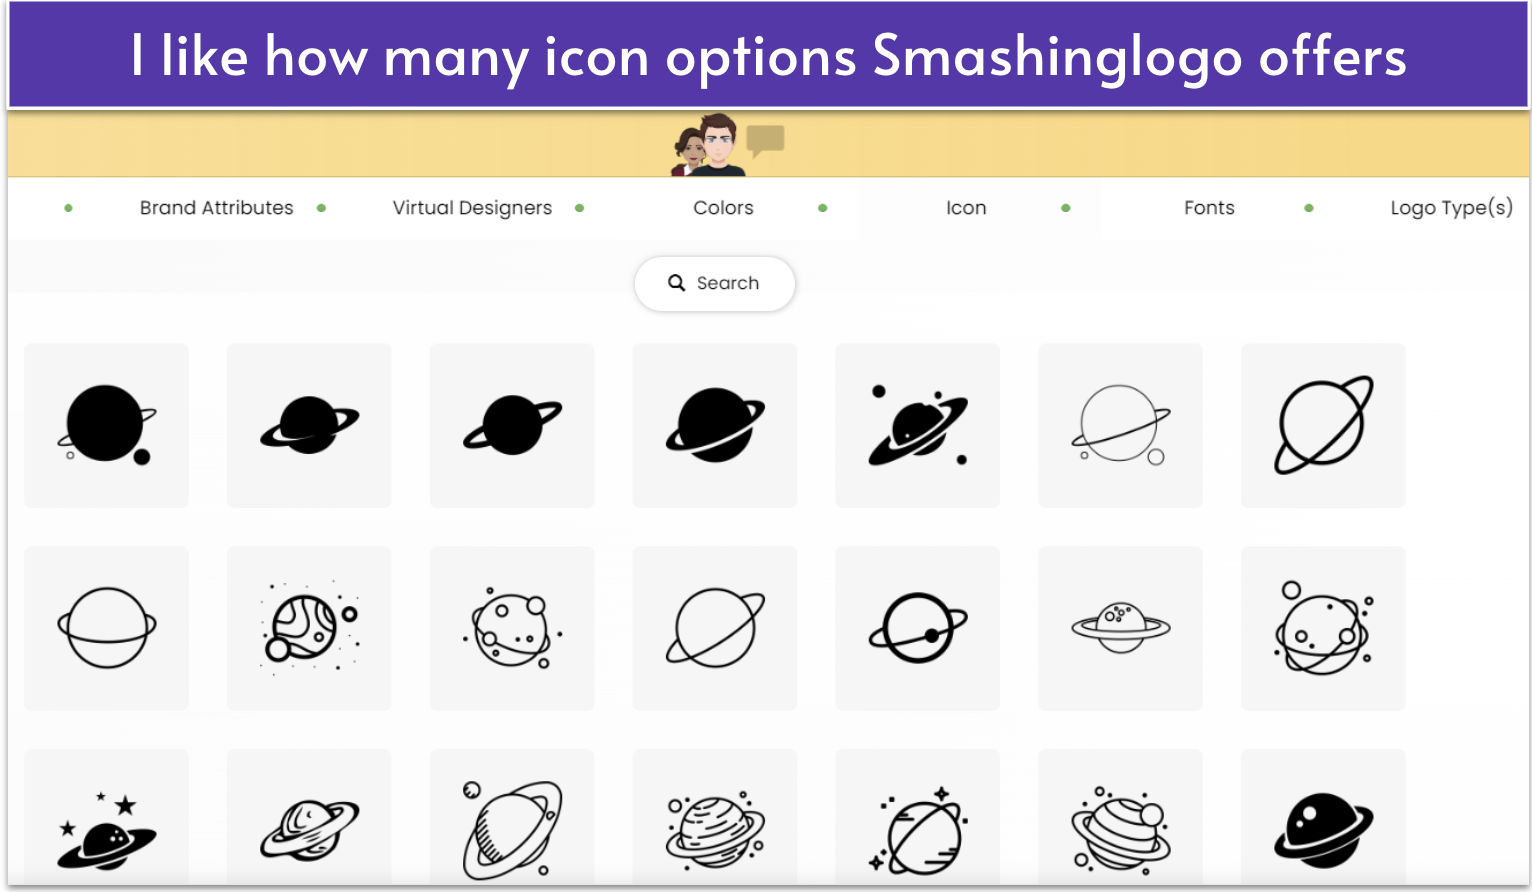 Smashinglogo icons